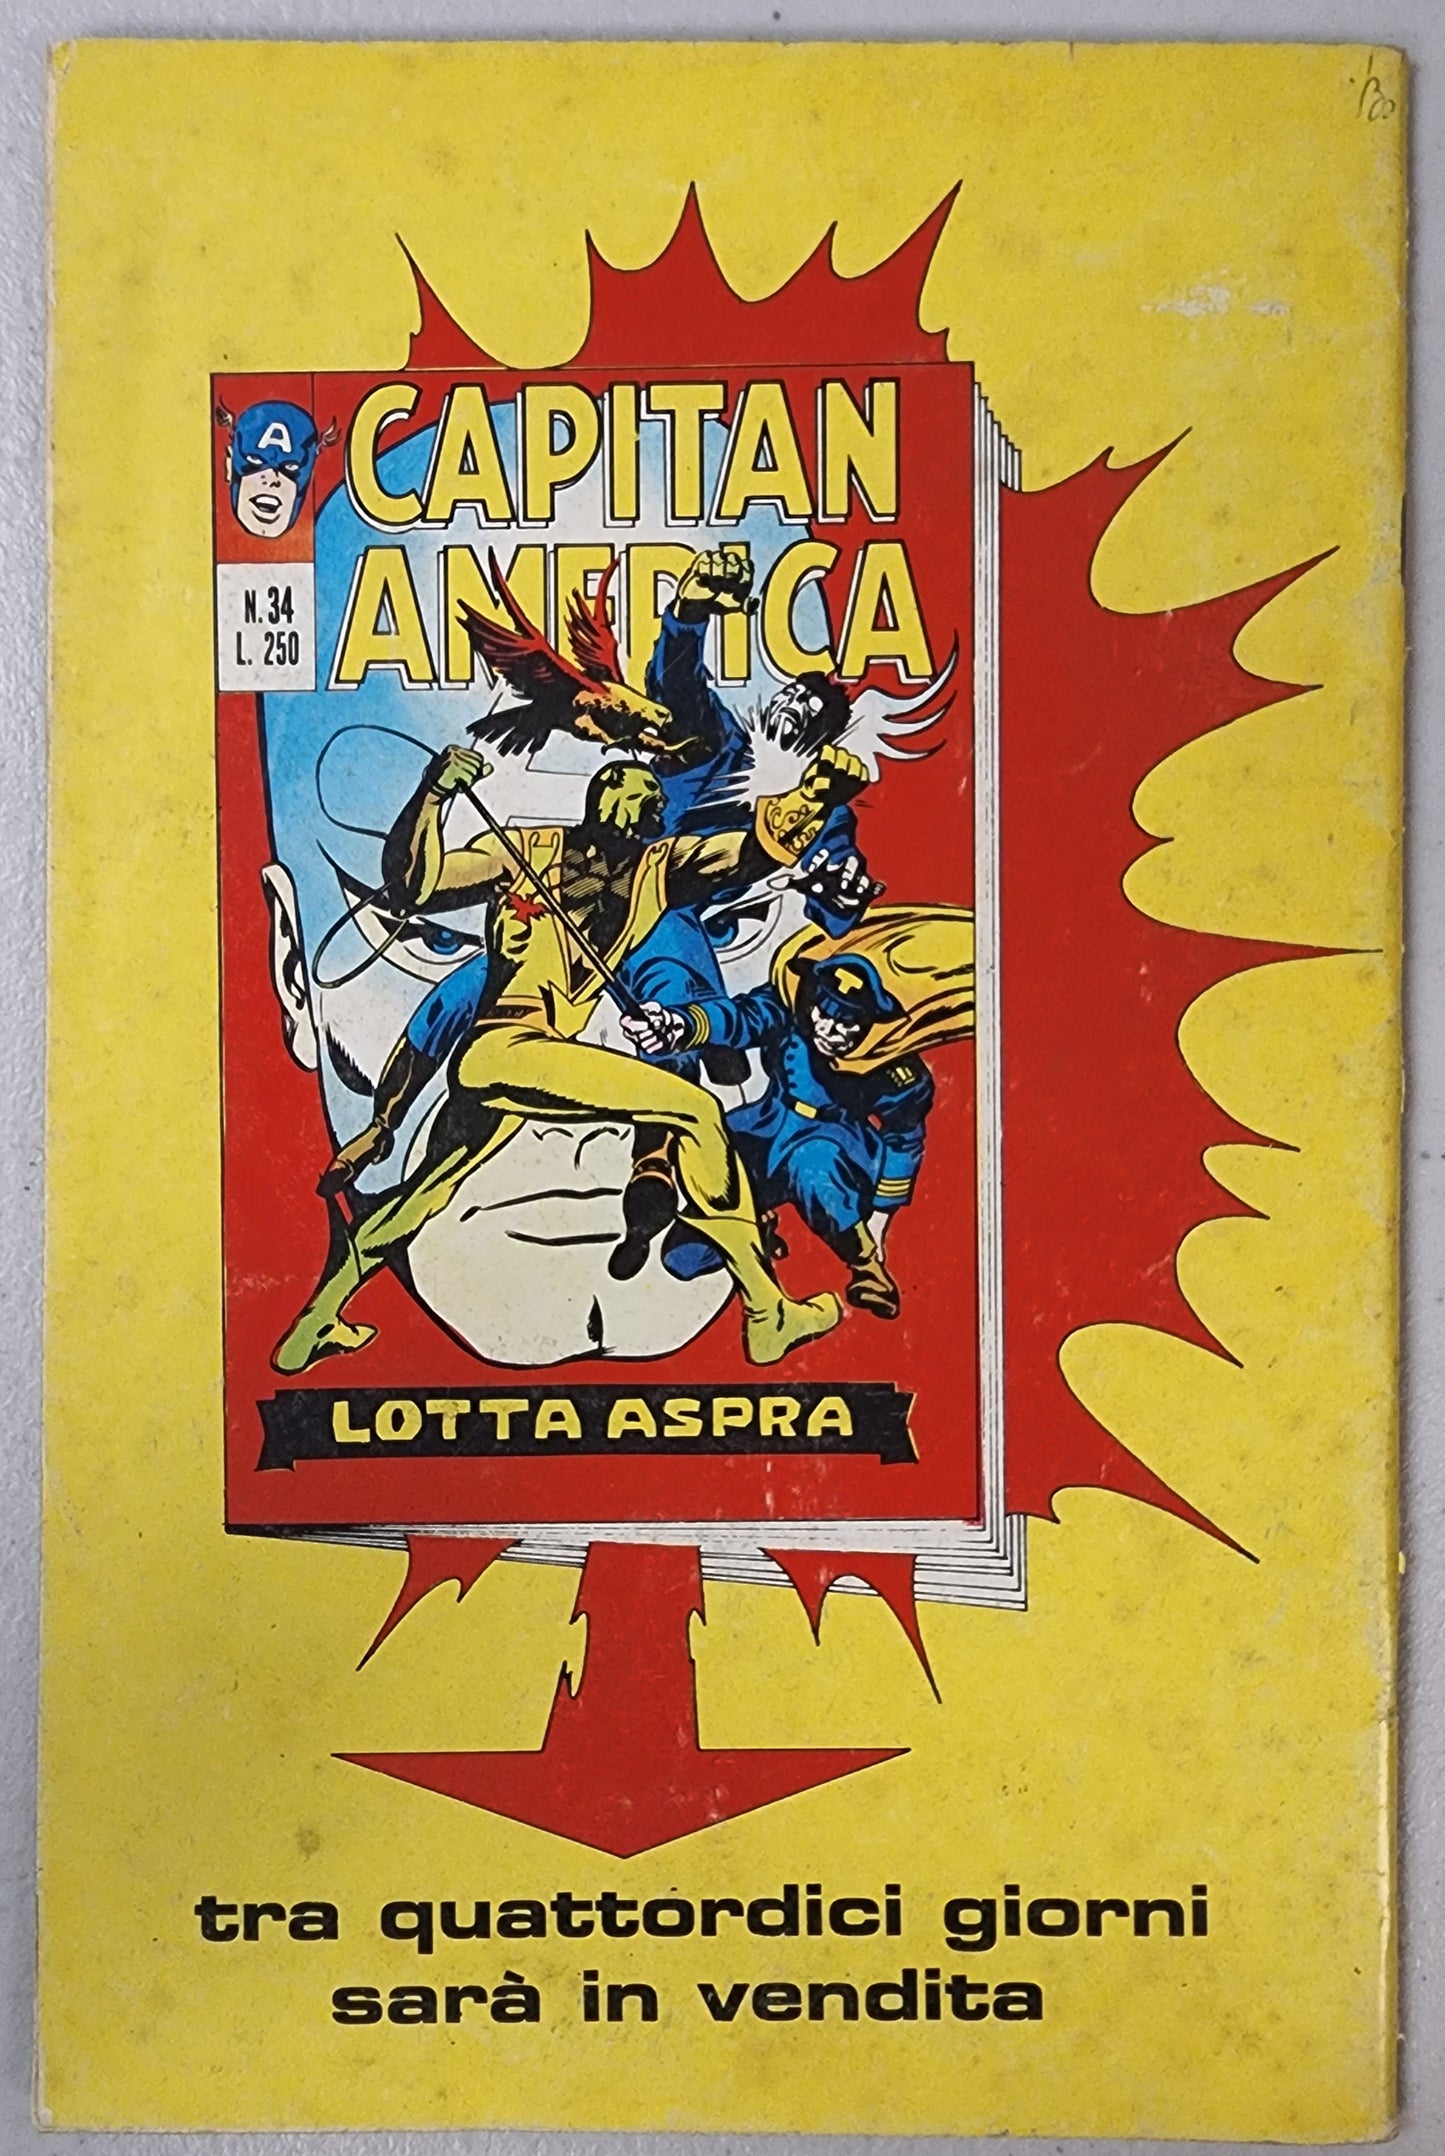 CAPTAIN AMERICA #33 (1ST APP FALCON) ITALIAN EDITION 1974